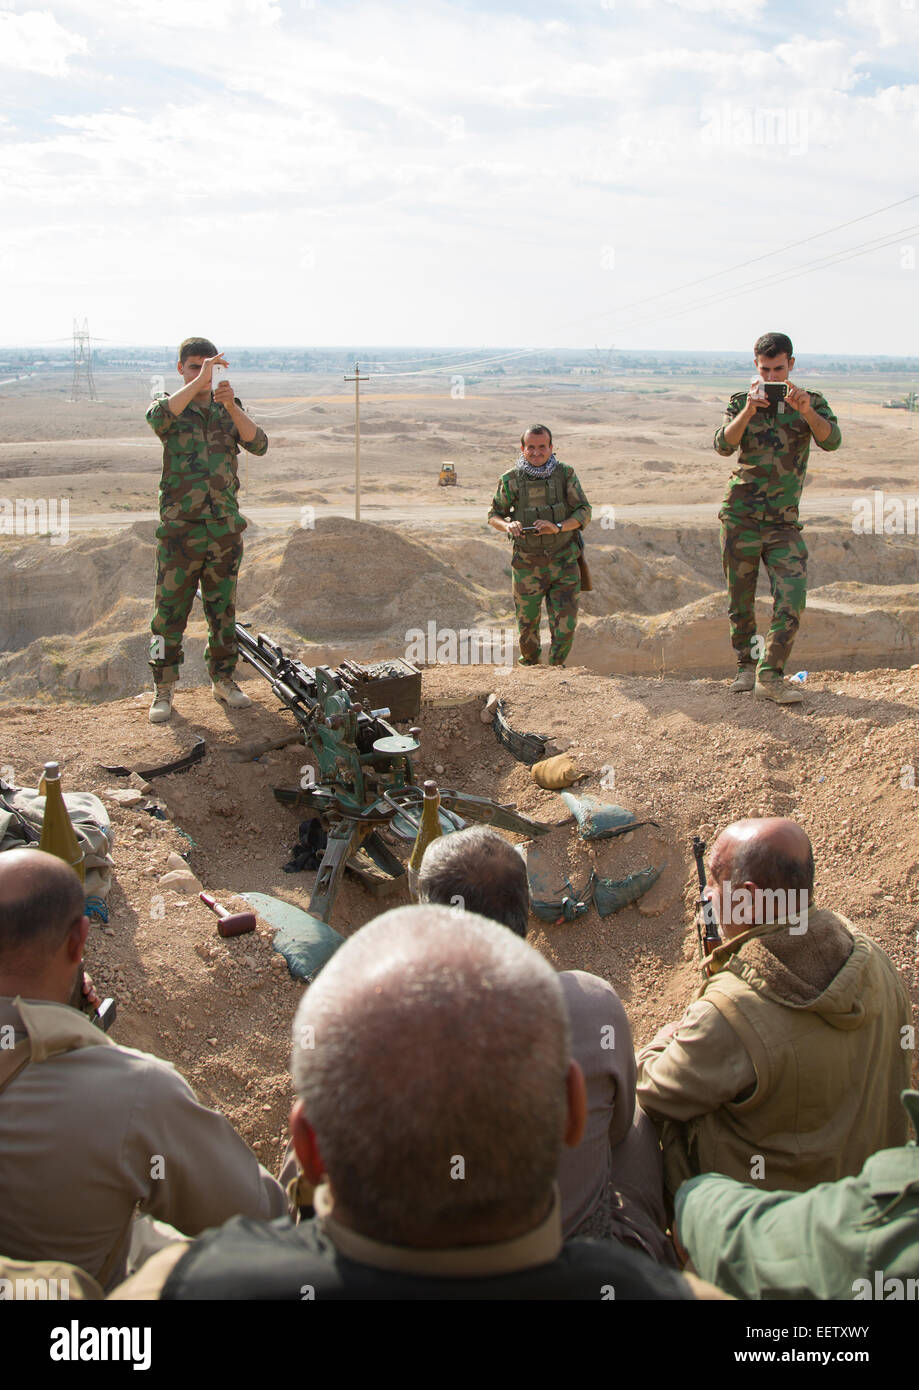 Kurdish Peshmergas On The Frontline Taking Photos Souvenirs, Kirkuk, Kurdistan, Iraq Stock Photo